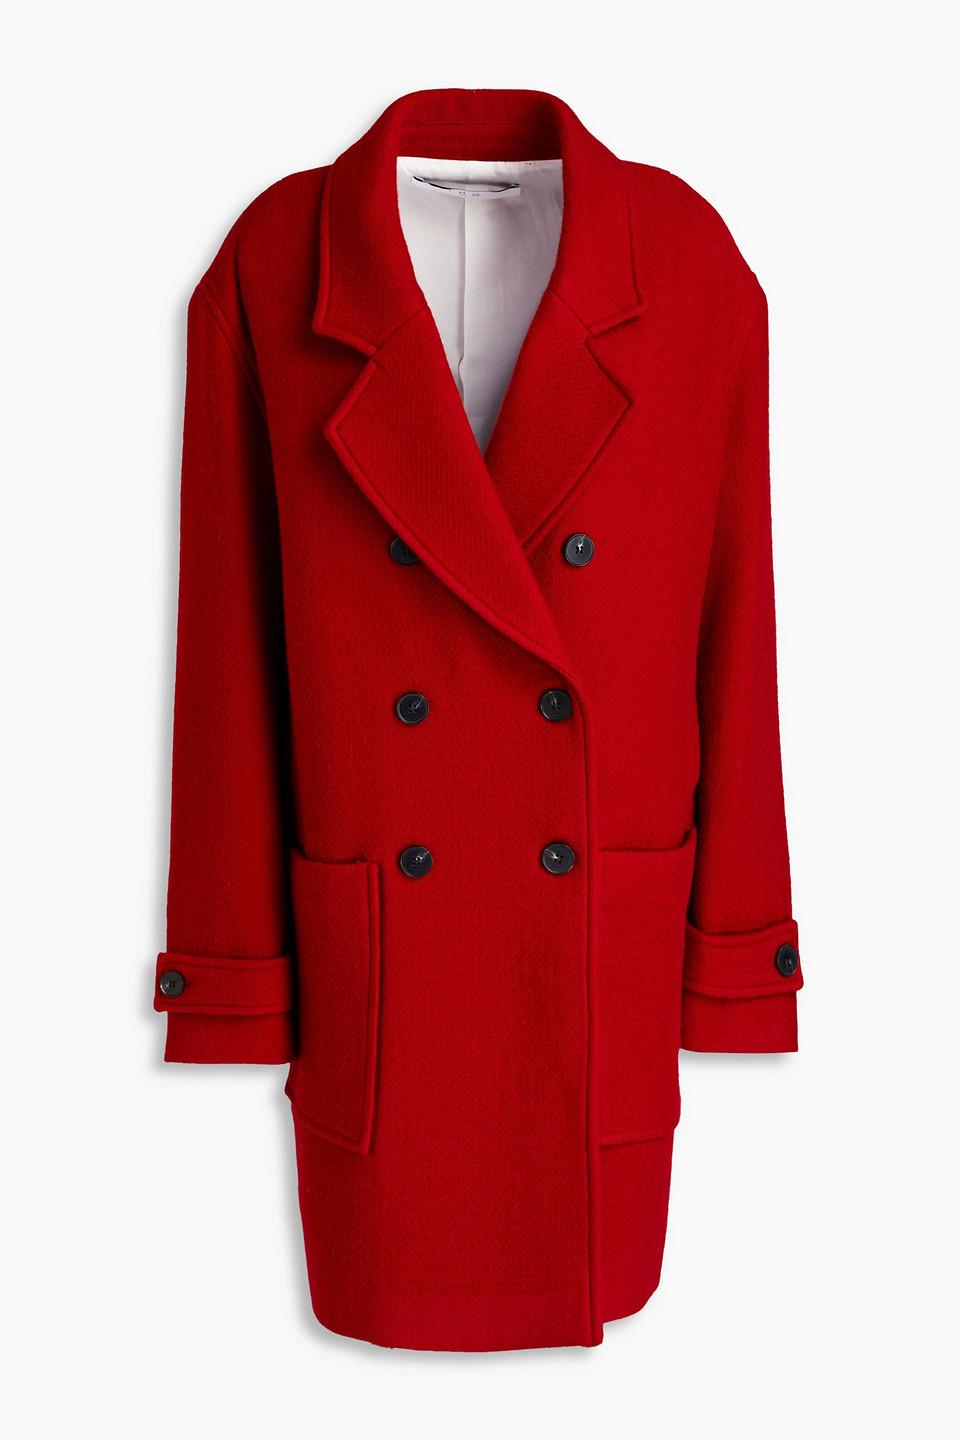 IRO Jaliah Oversized Brushed Wool-blend Coat in Red | Lyst UK